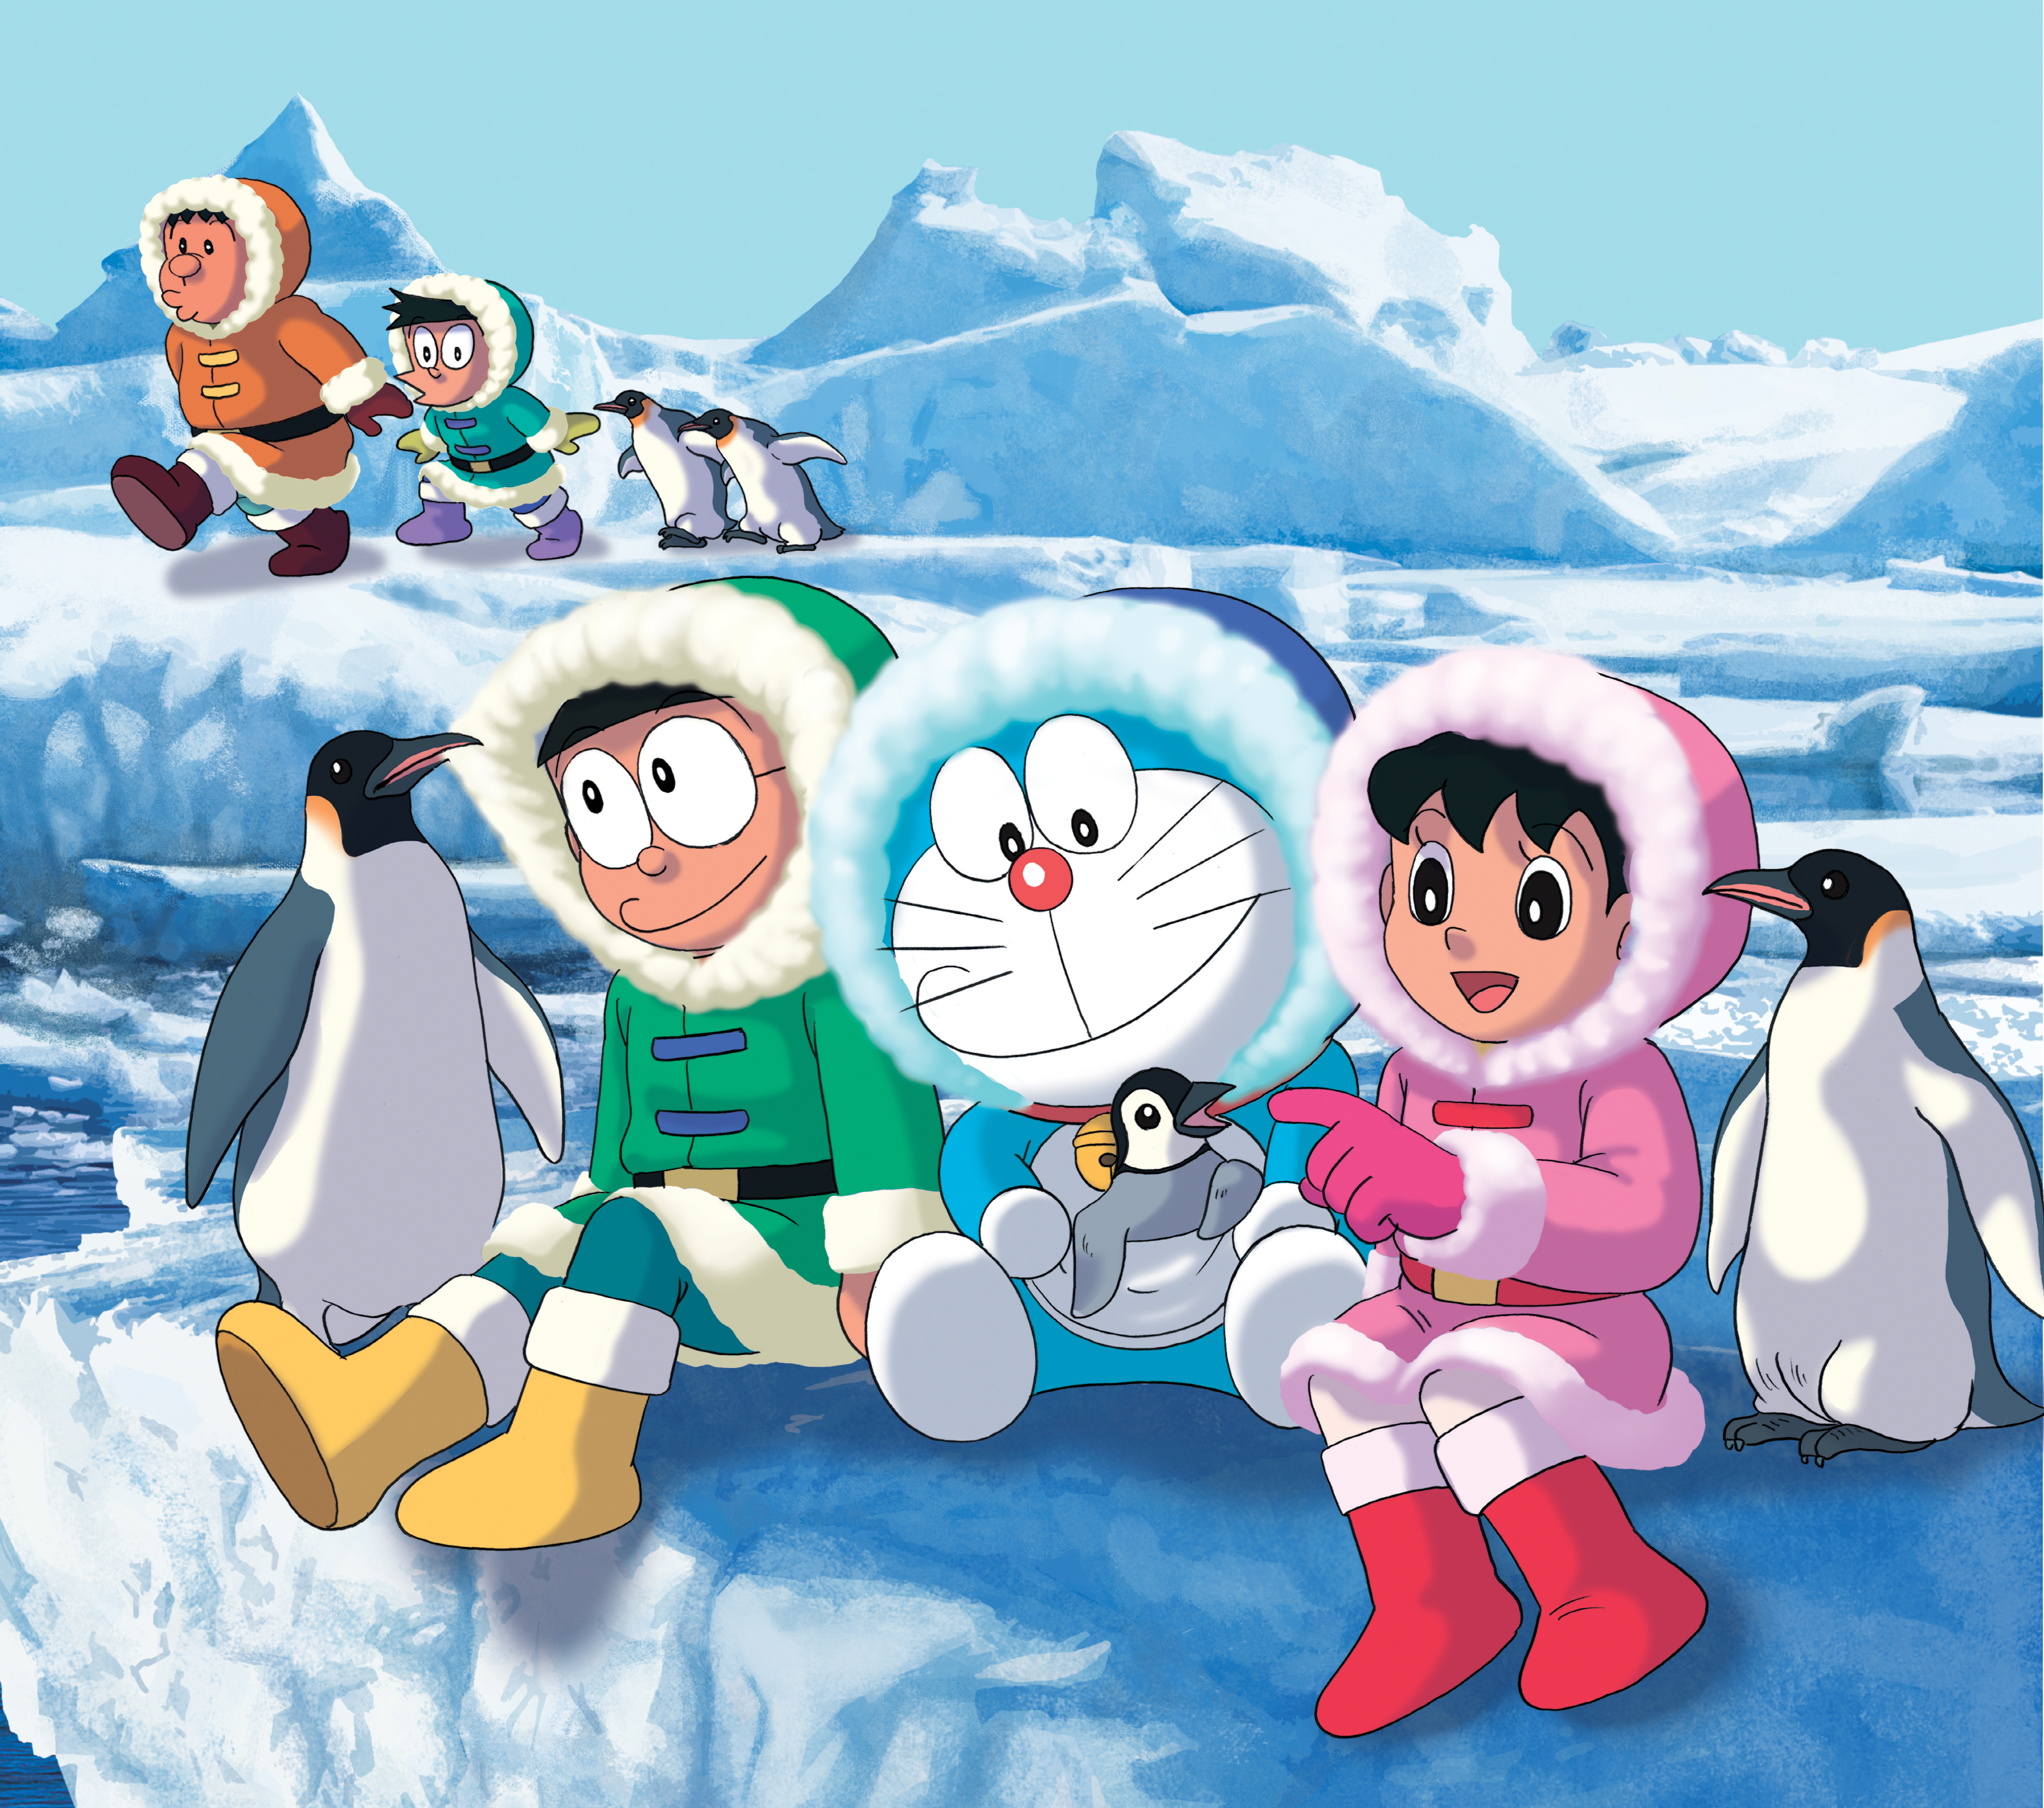 nobita und shizuka hd wallpaper,animierter cartoon,karikatur,animation,im schnee spielen,illustration